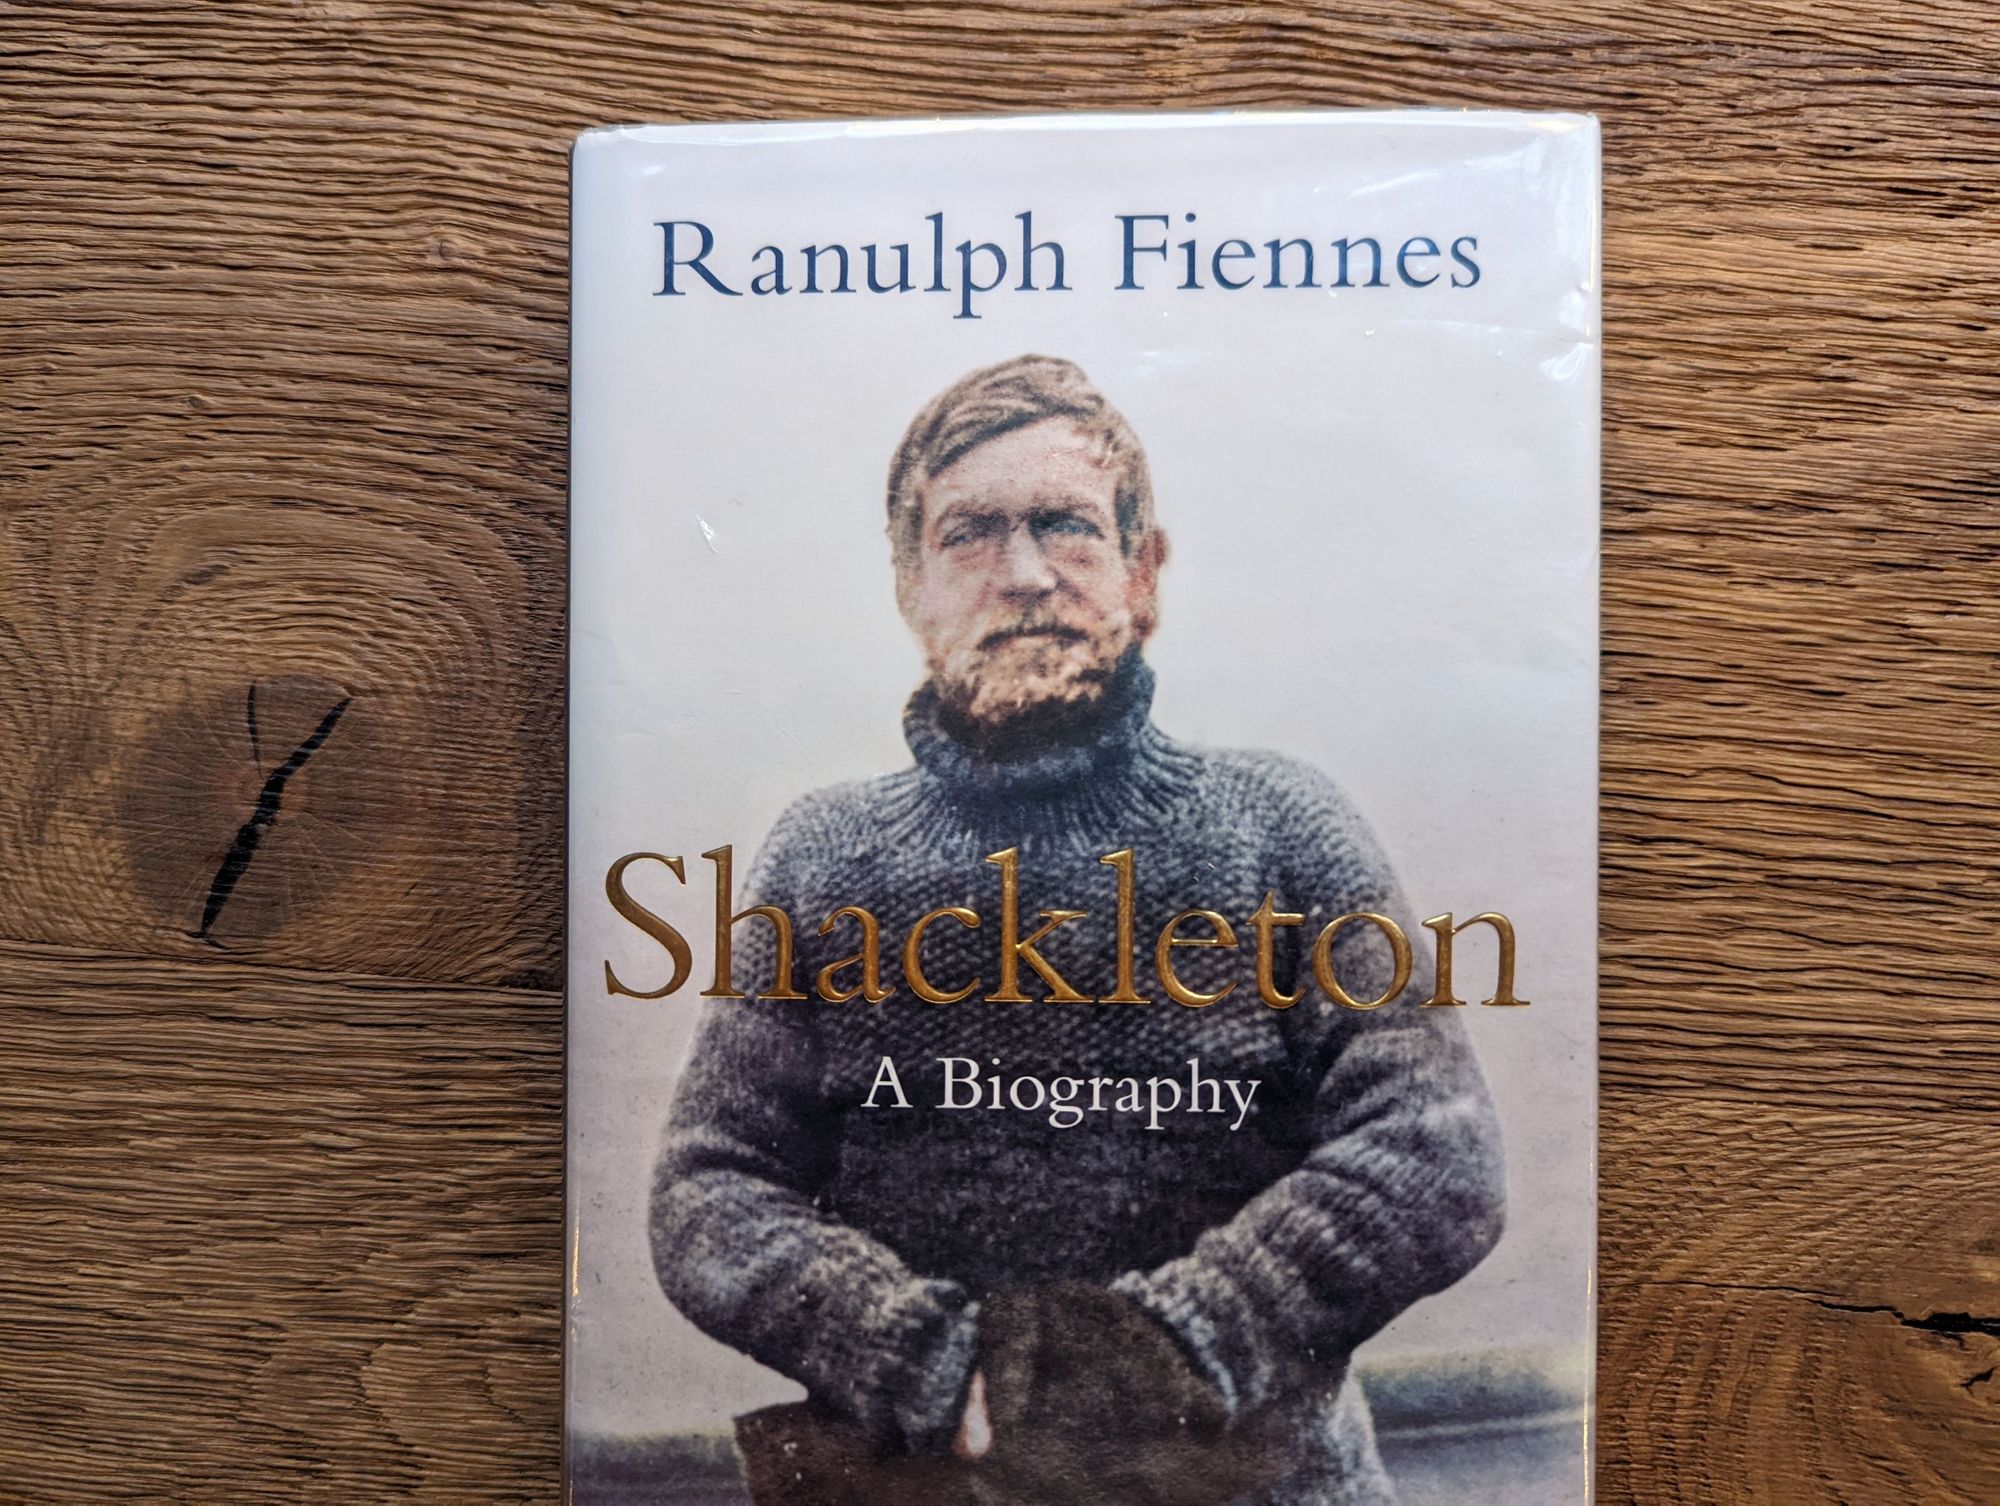 Book portrait of Shackleton: A Biography